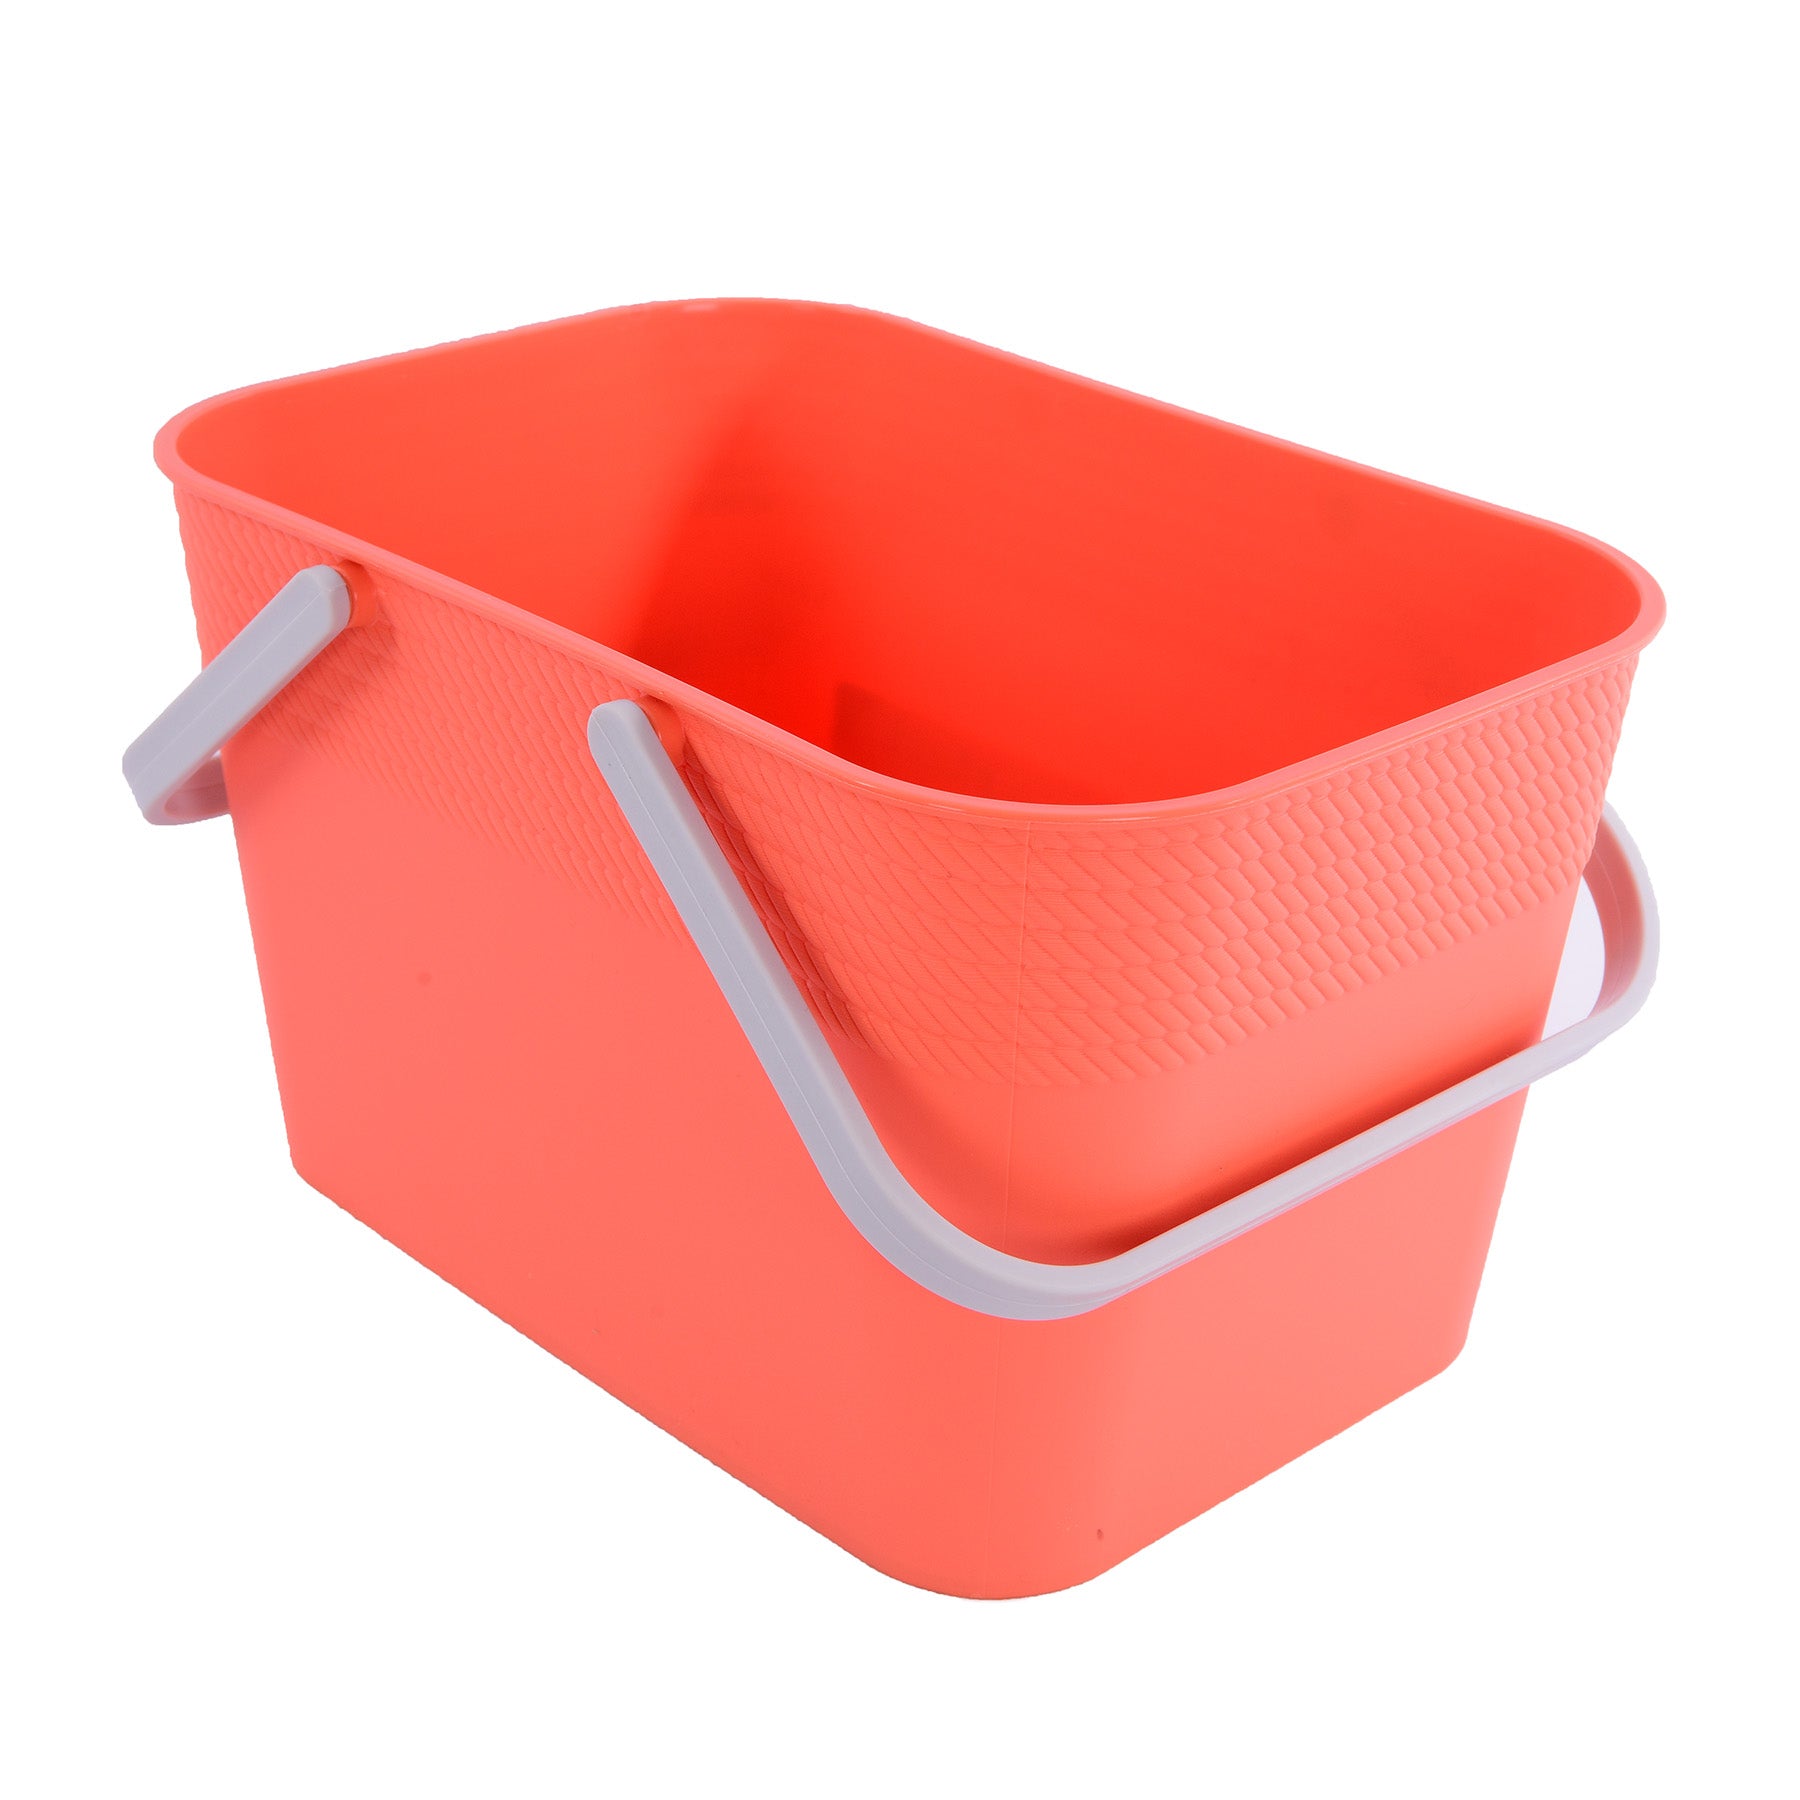 Basket with handles - Orange